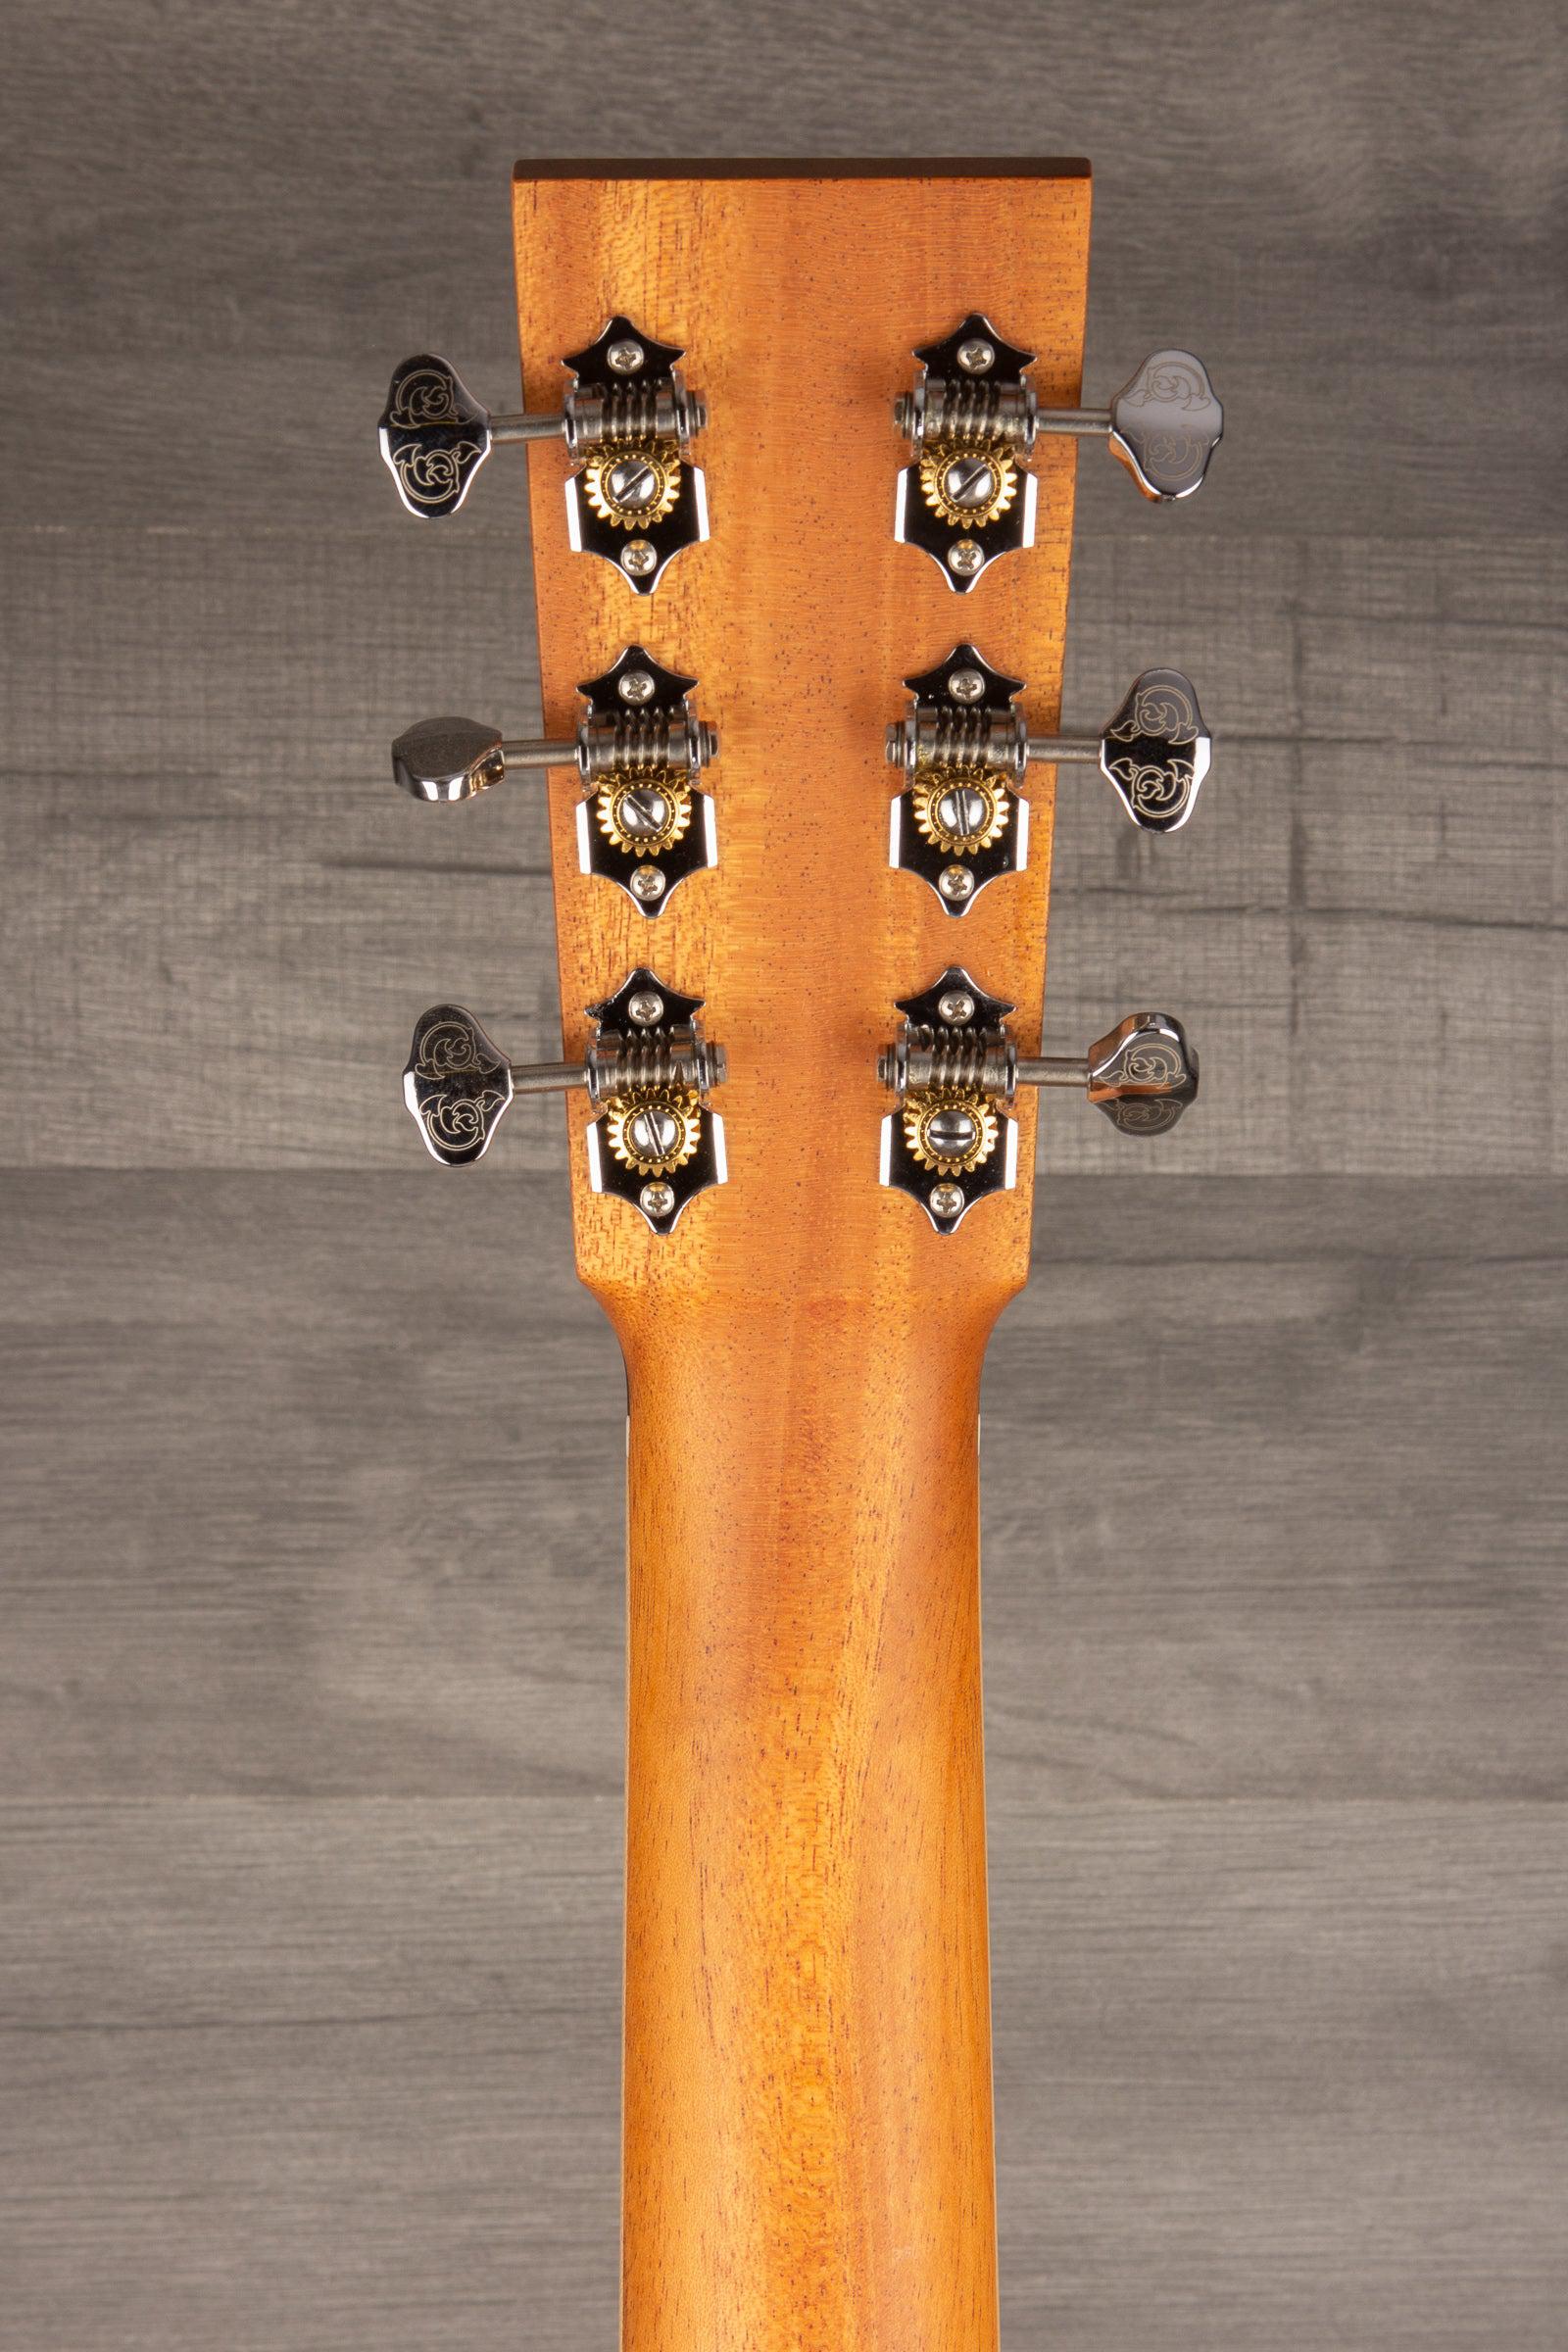 Larrivee OM-40 Mahogany Guitar - MusicStreet